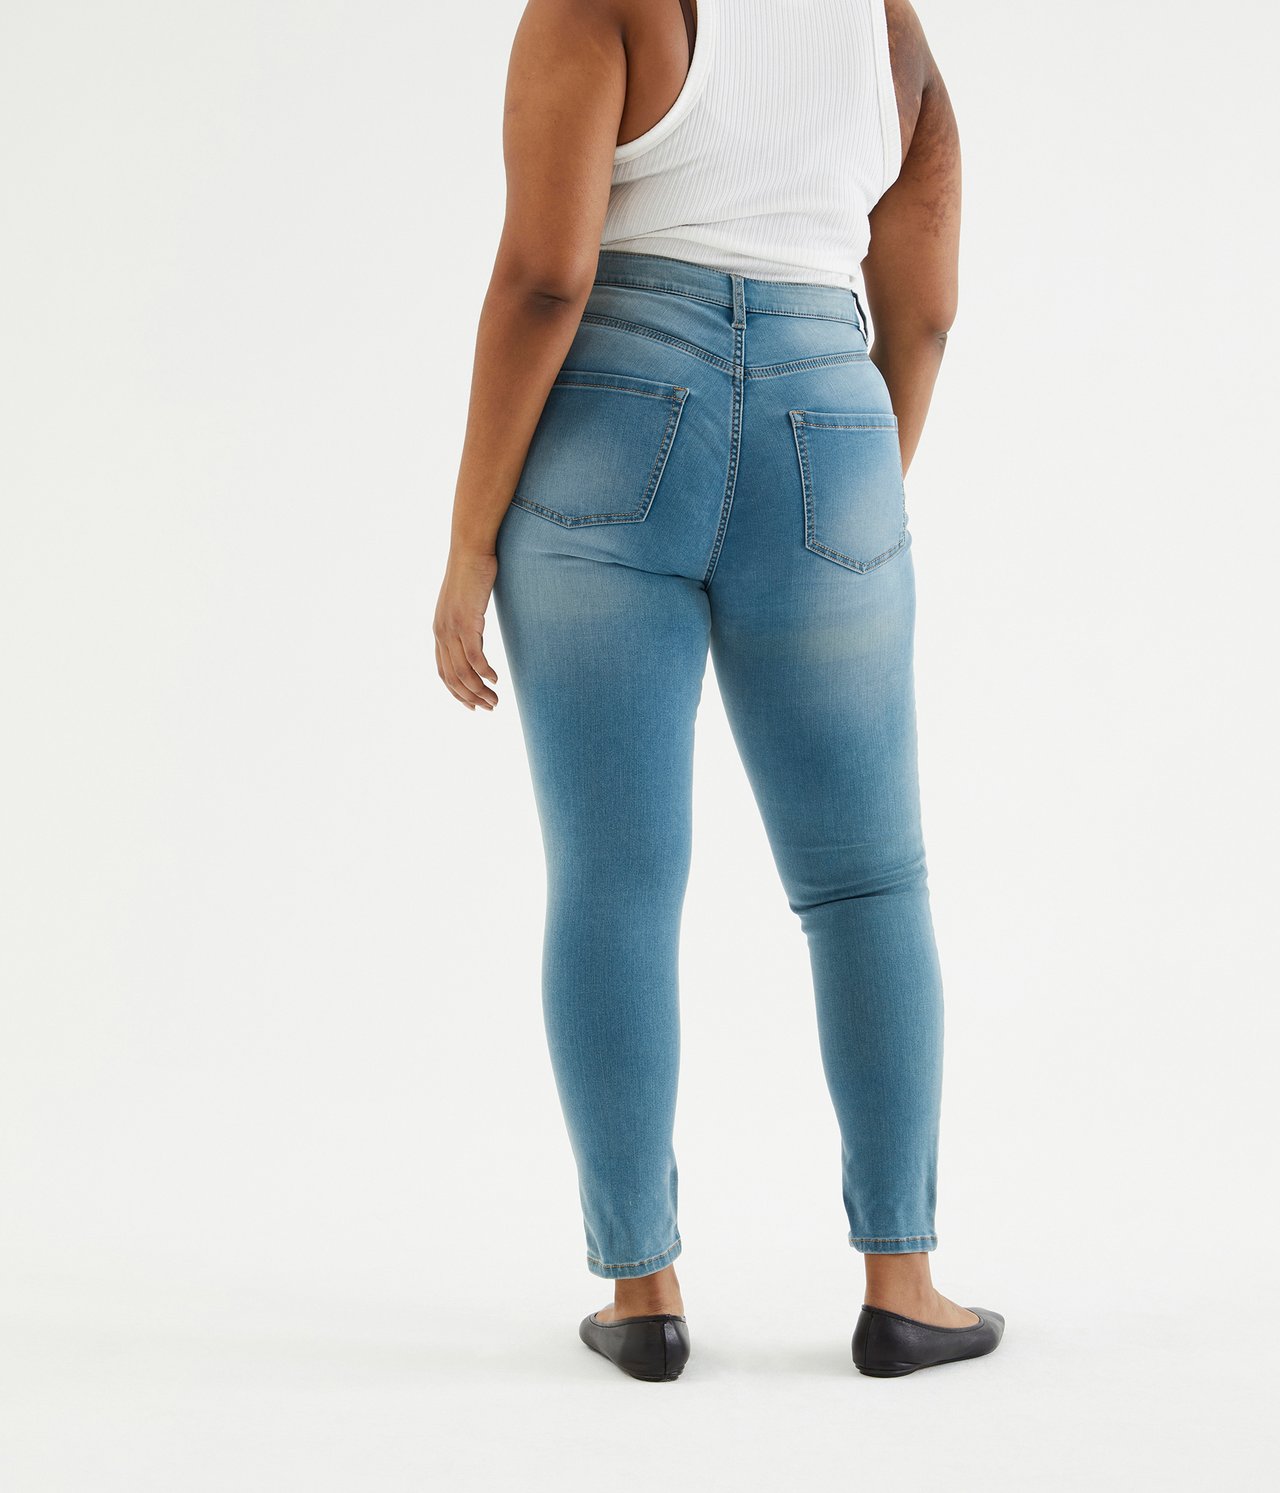 Super slim jeans short leg - Denim - 6